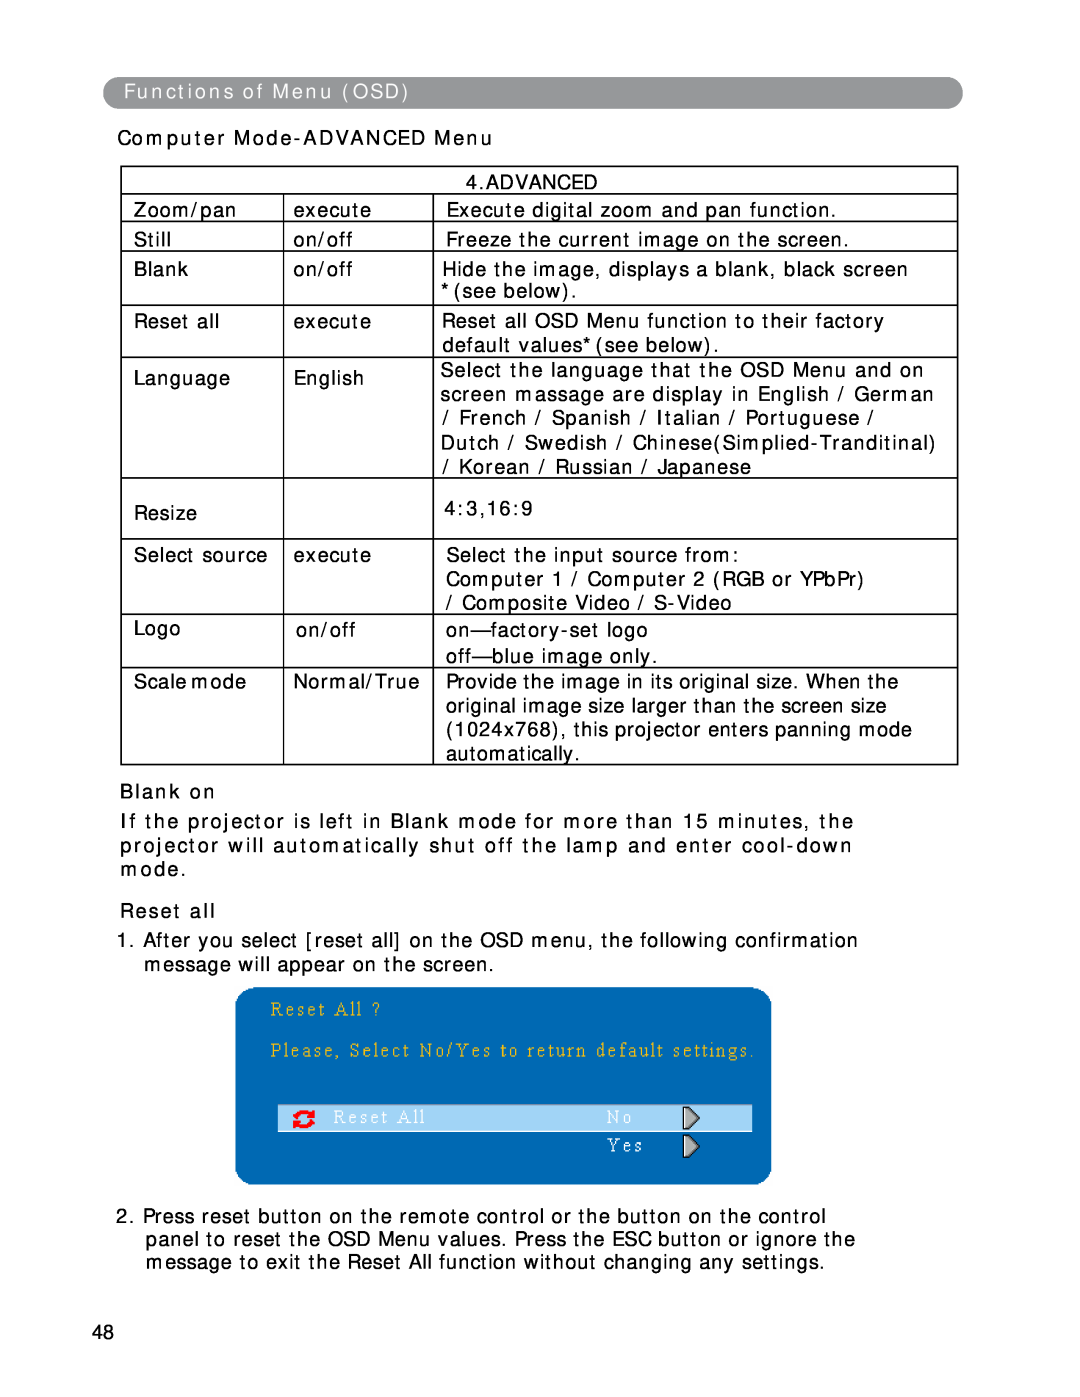 Eiki LC-XWP2000 manual Functions of Menu OSD, Computer Mode-ADVANCED Menu, Blank on, Reset all 